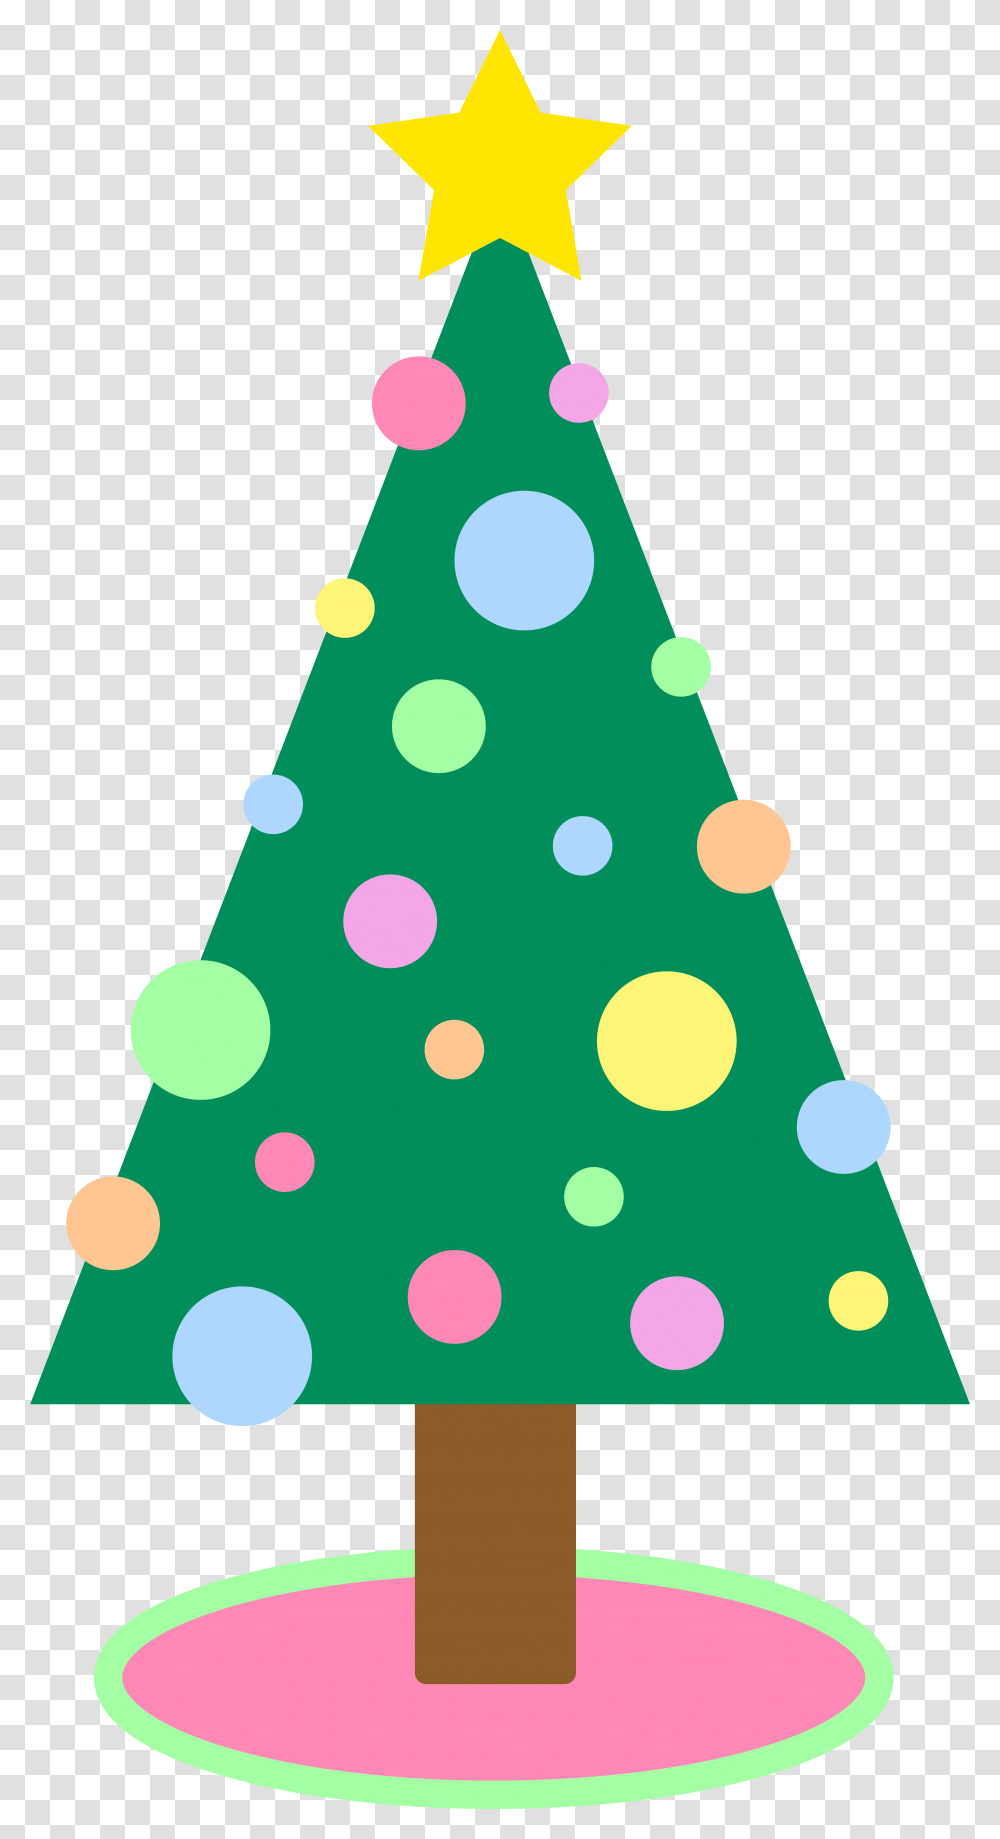 Free Christmas Tree Pics Download Clip Art Christmas Tree Simple Art, Ornament, Plant, Clothing, Apparel Transparent Png